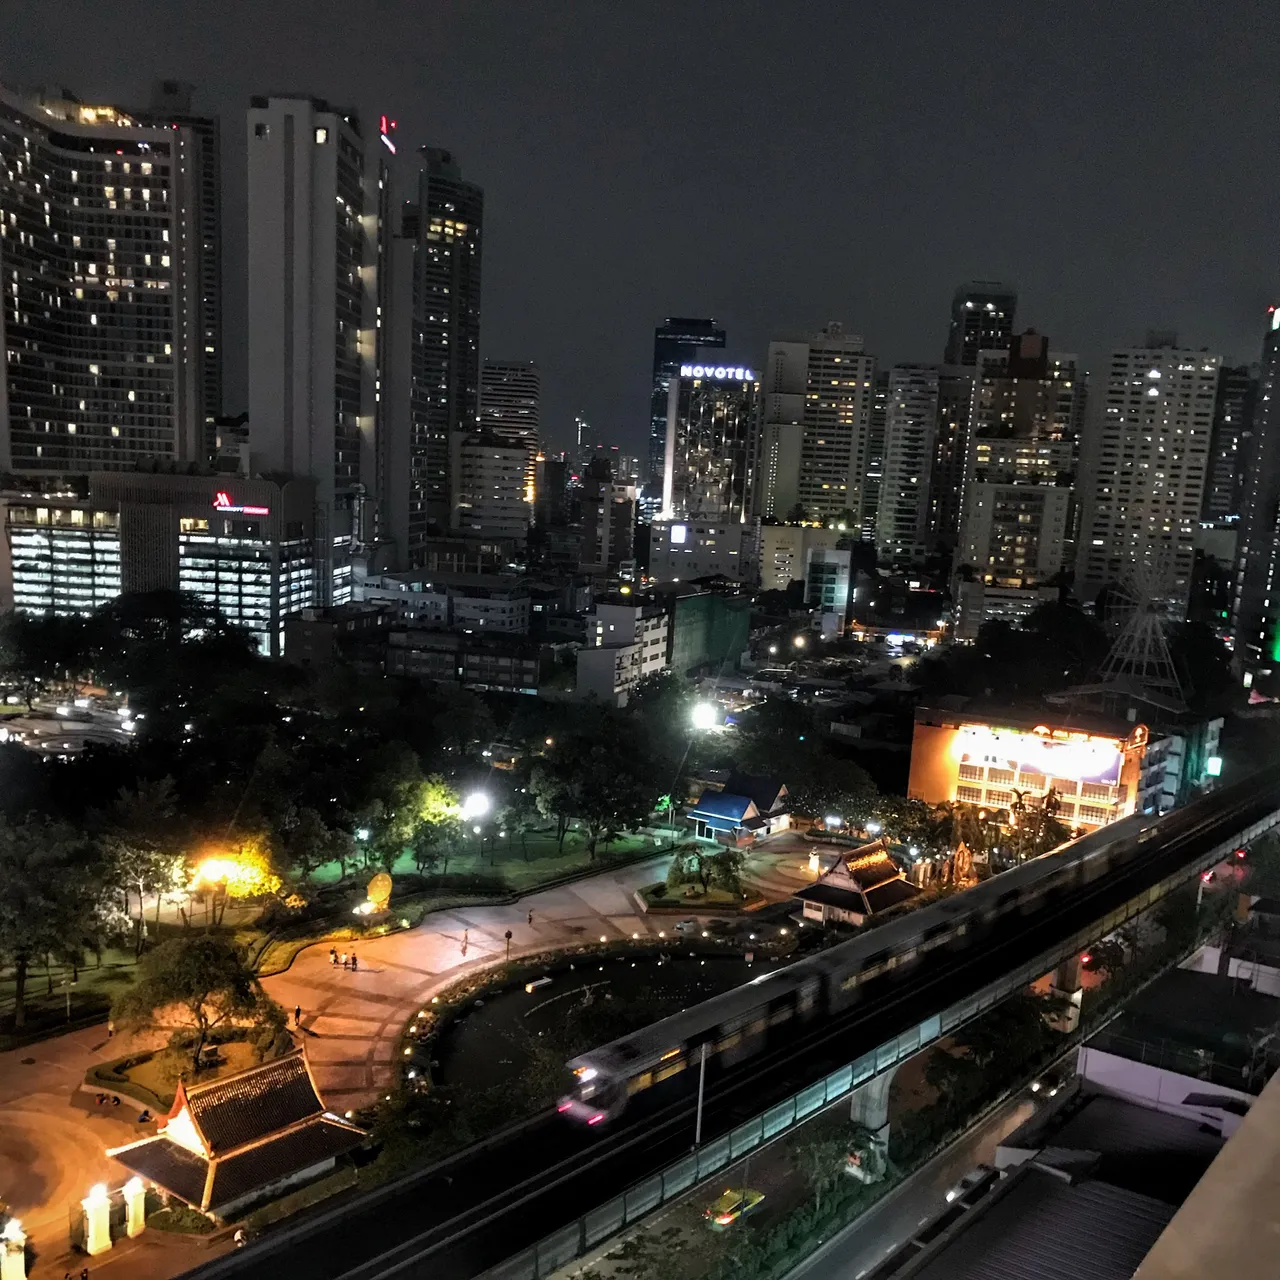 Goodnight Bangkok!